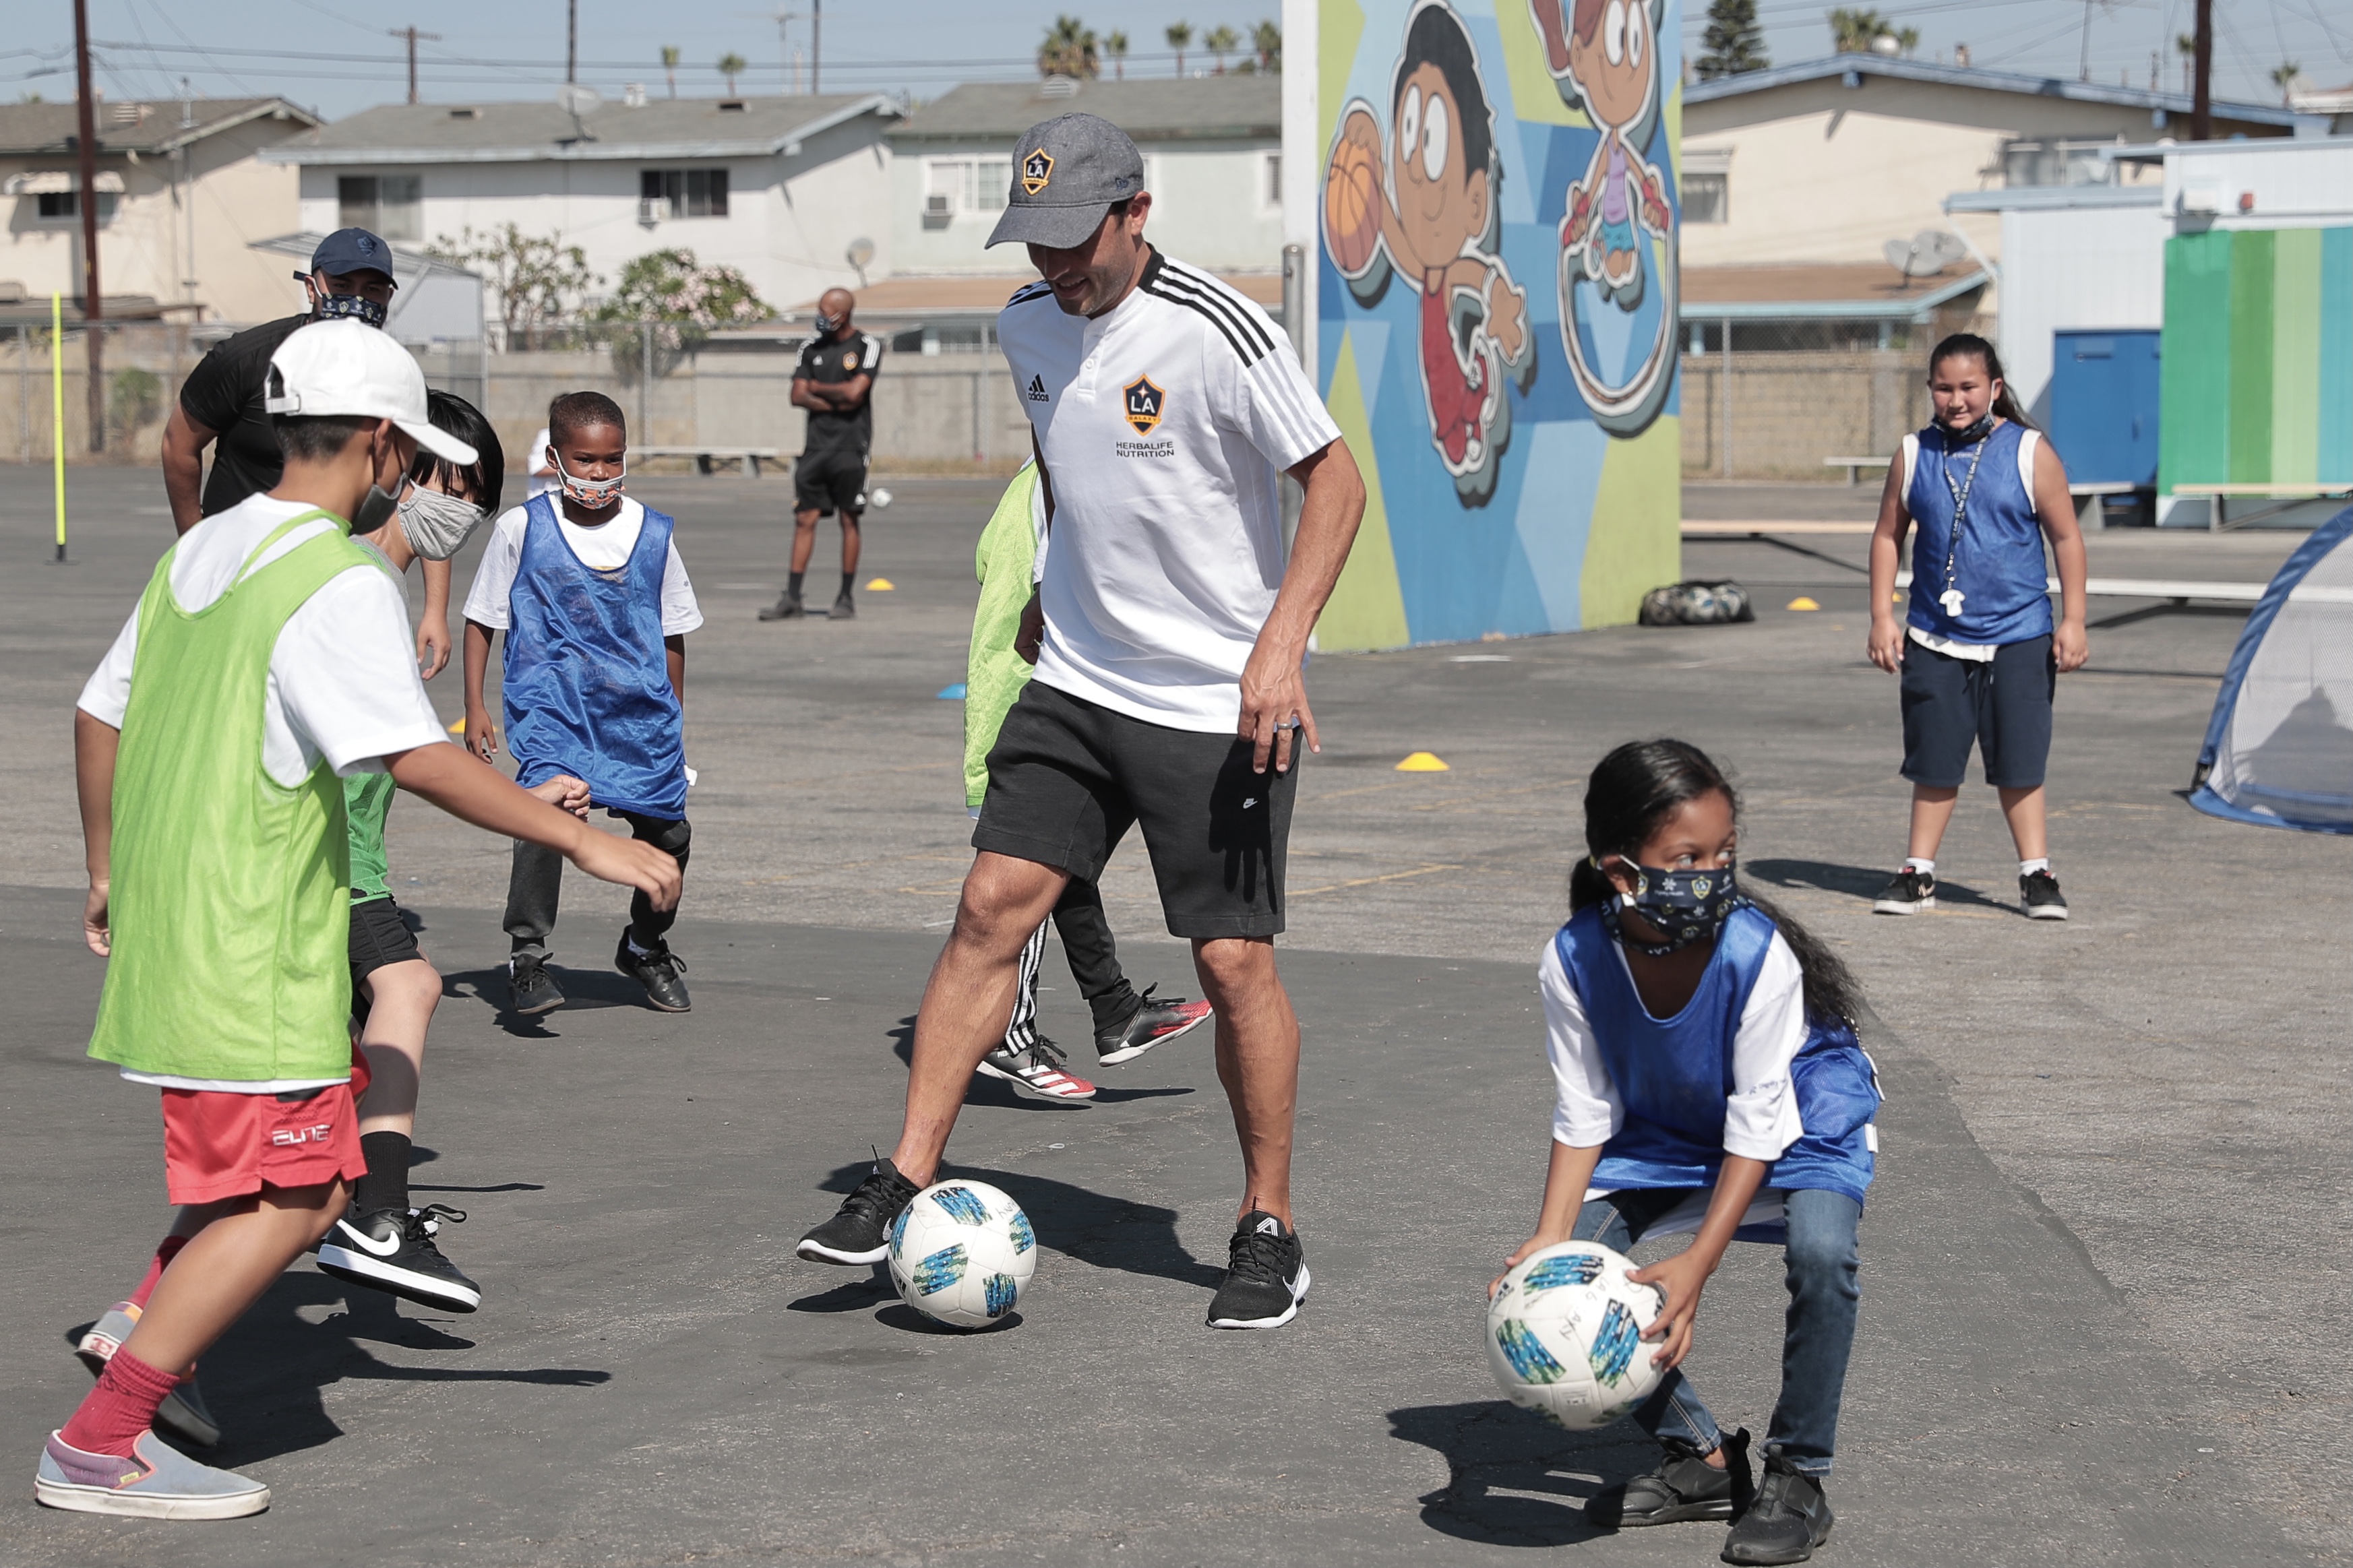 Landon Donovan kicks a soccer ball around with local elementary school students in Carson, CA. 